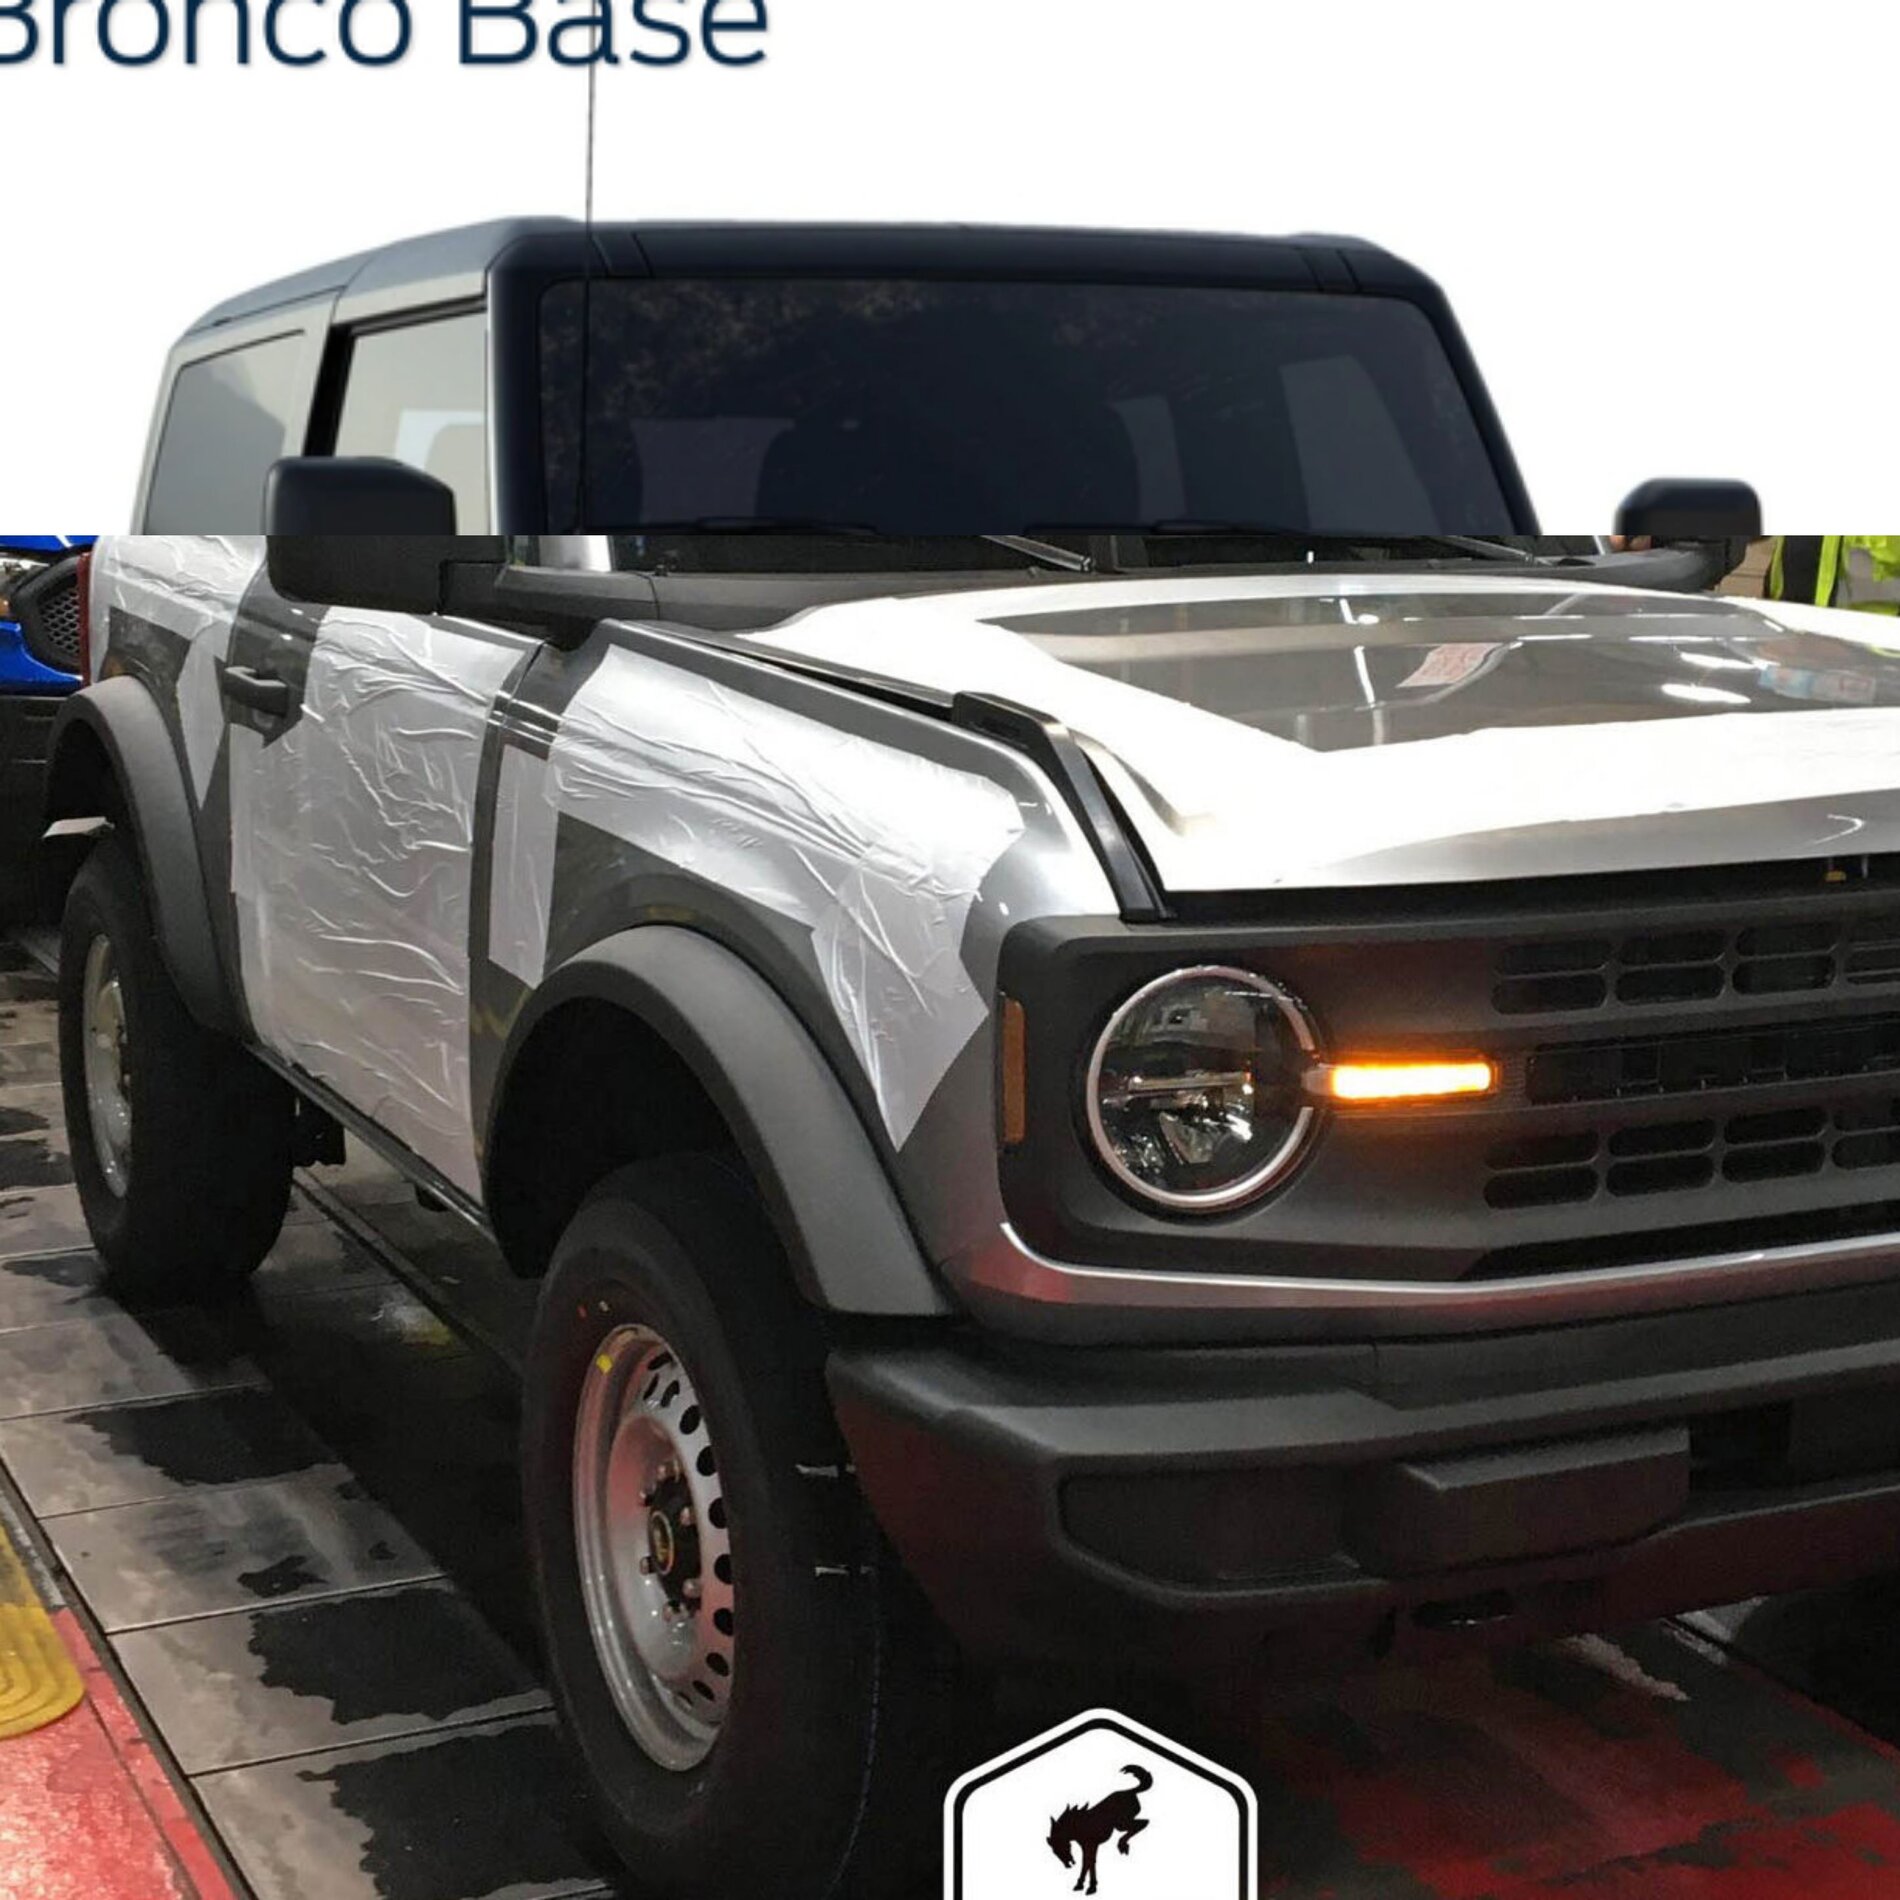 Ford Bronco Base Model Bronco Thread 20200924_185240